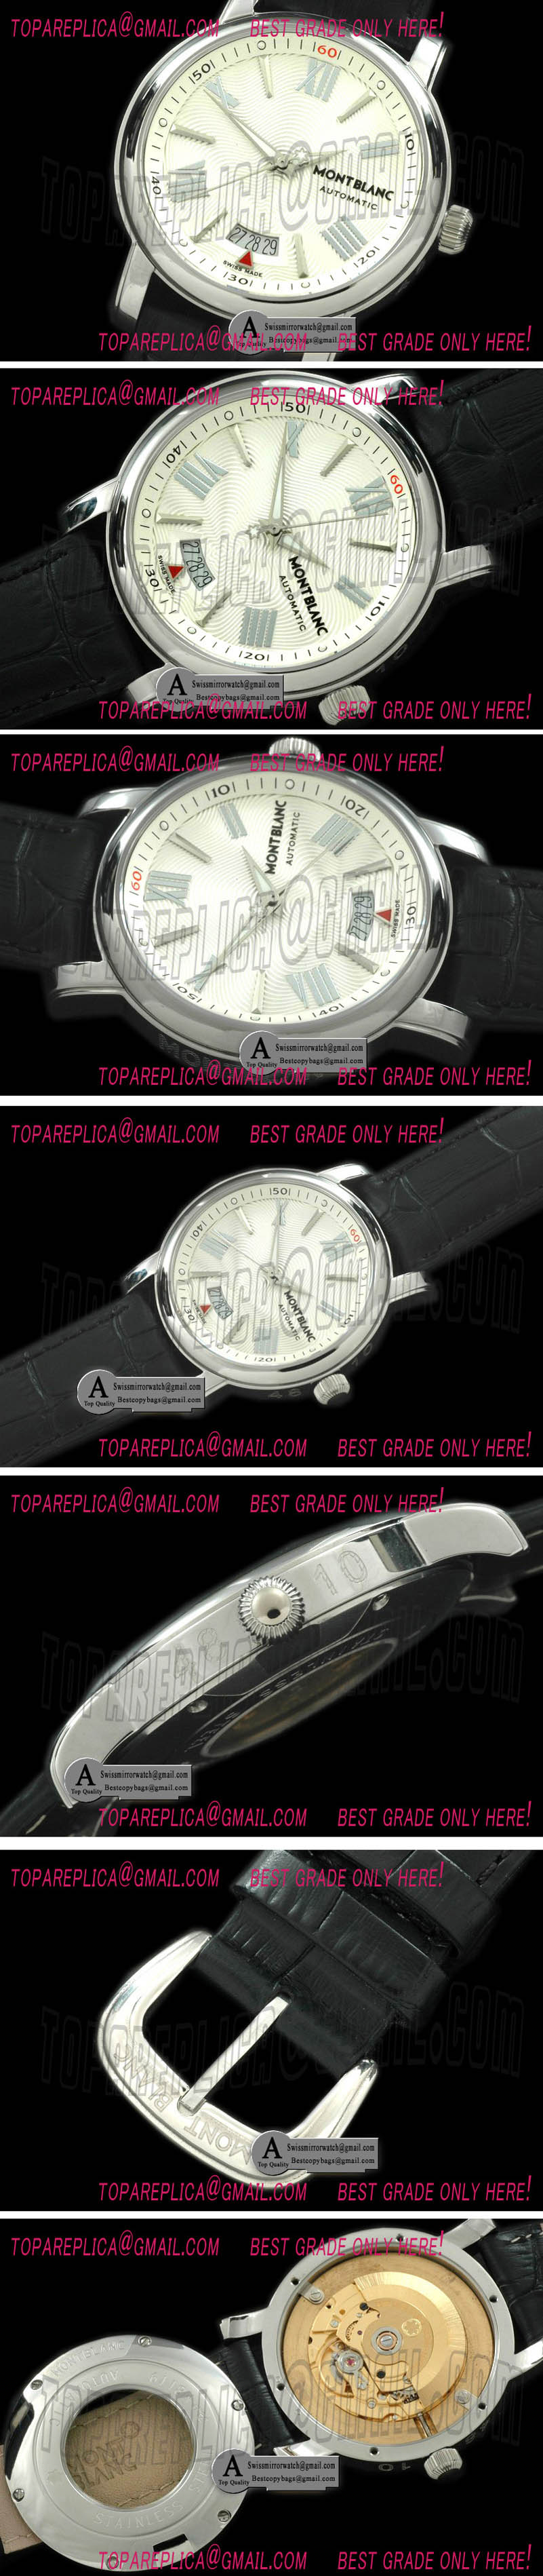 Mont Blanc Star 4810 Automatic 102342 SS/Leather White Swiss Eta 2824 Replica Watches